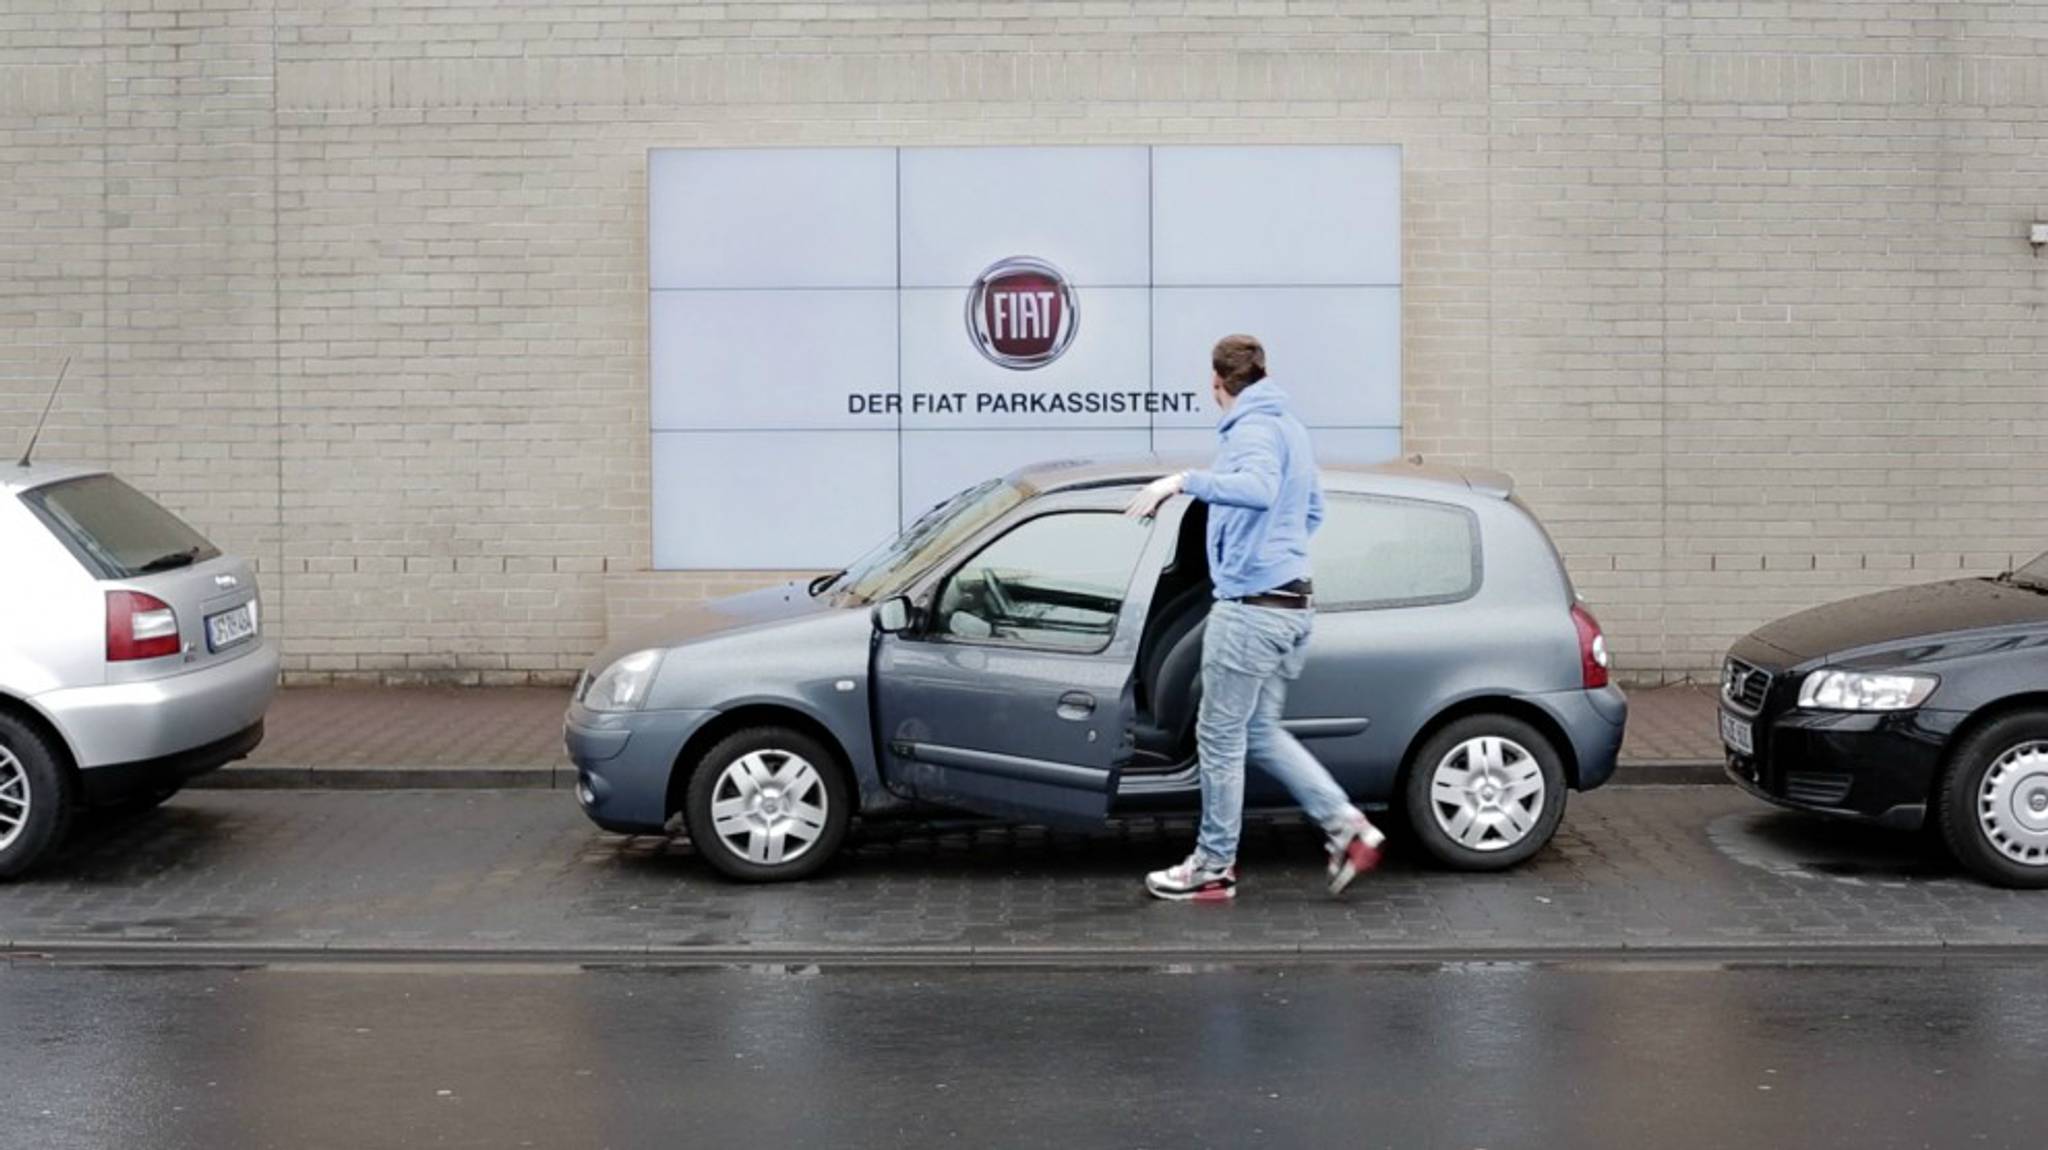 Fiat billboard helps drivers parallel park